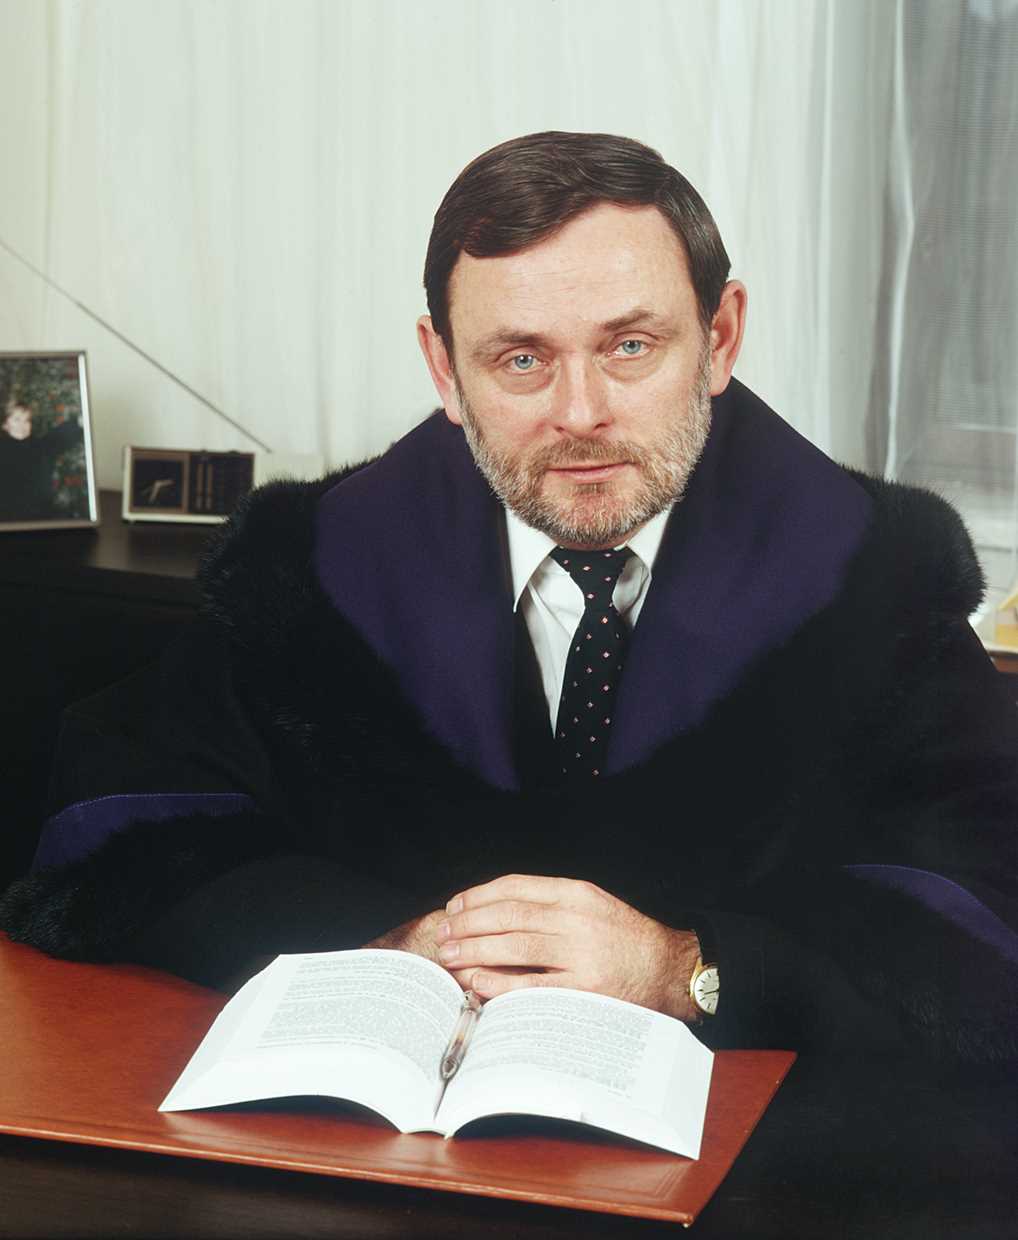 JUDr. Pavel Varvařovský